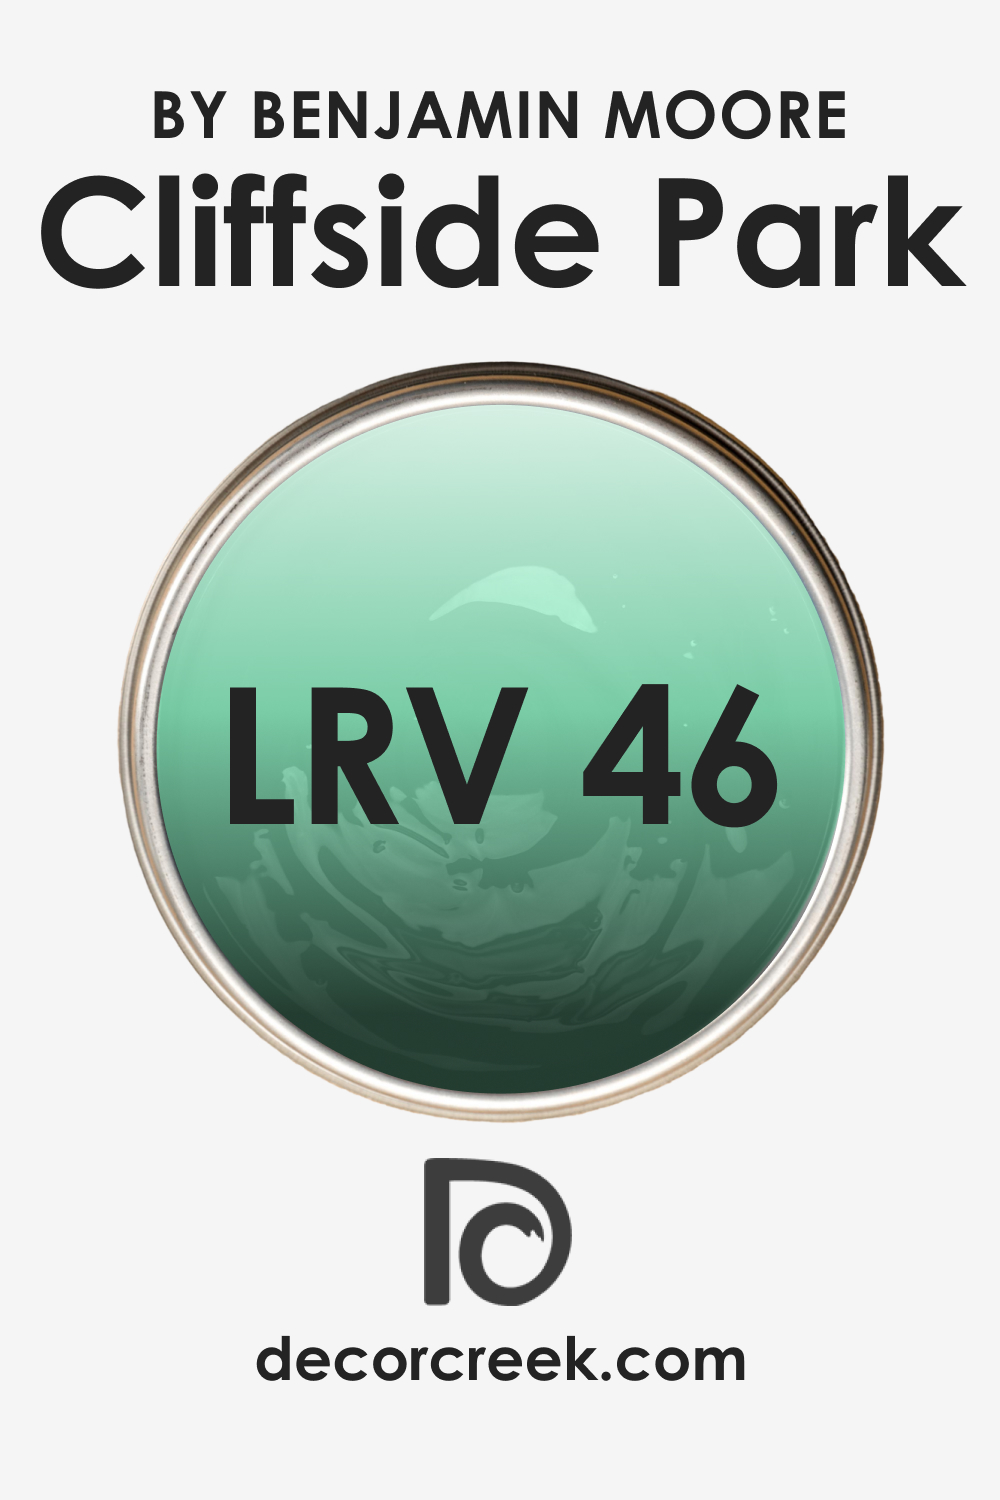 LRV of Cliffside Park 579 - LRV is 46